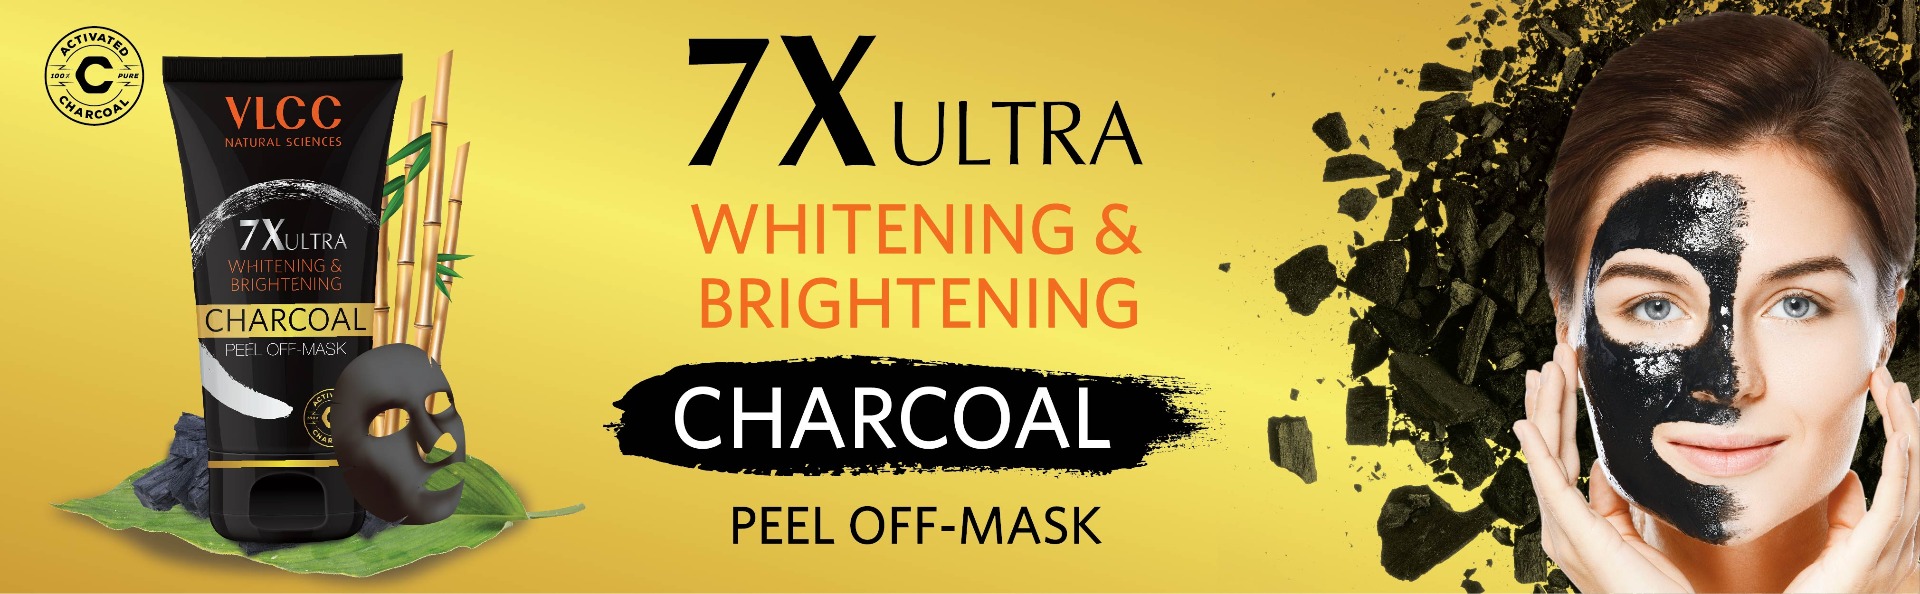 7x-ultra-whitening-brightening-charcoal-peel-off-mask